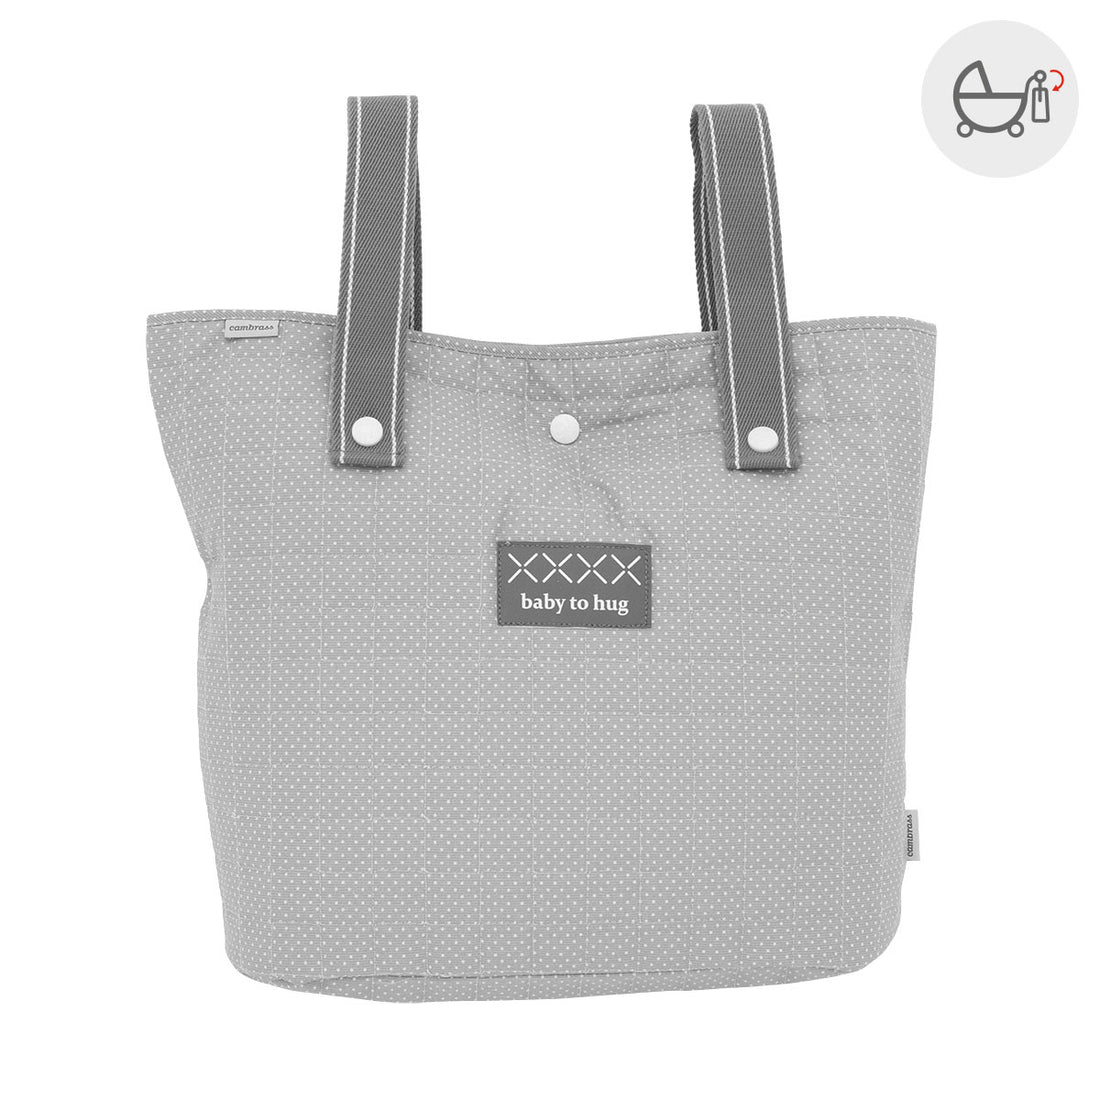 r&j-cambrass-sa-pram-carrybag-pic-1401-grey- (1)